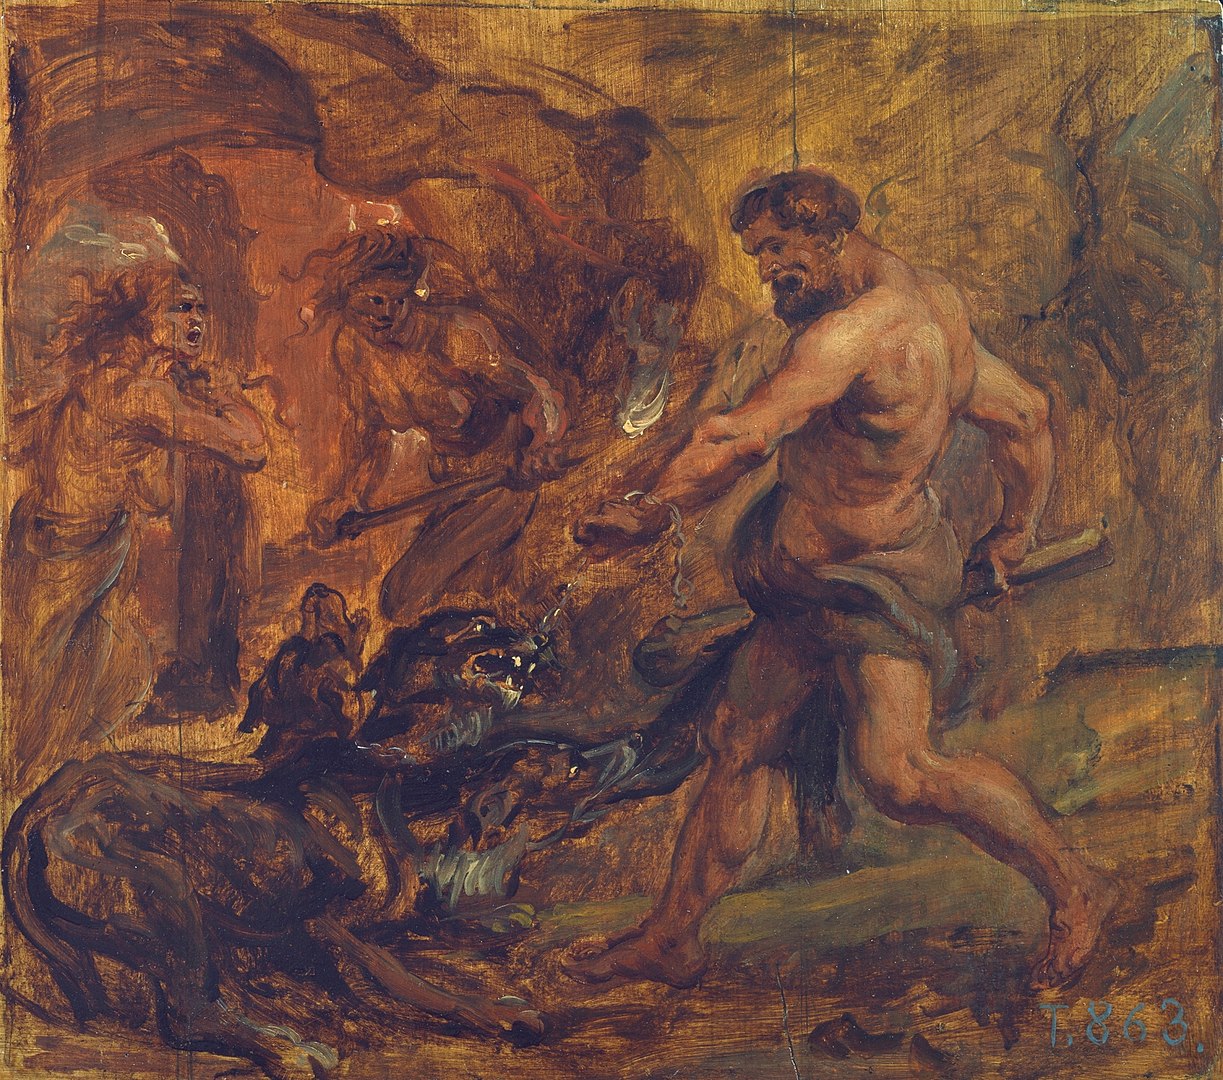 Hercules fighting Cerberus as part of the Labours of Hercules